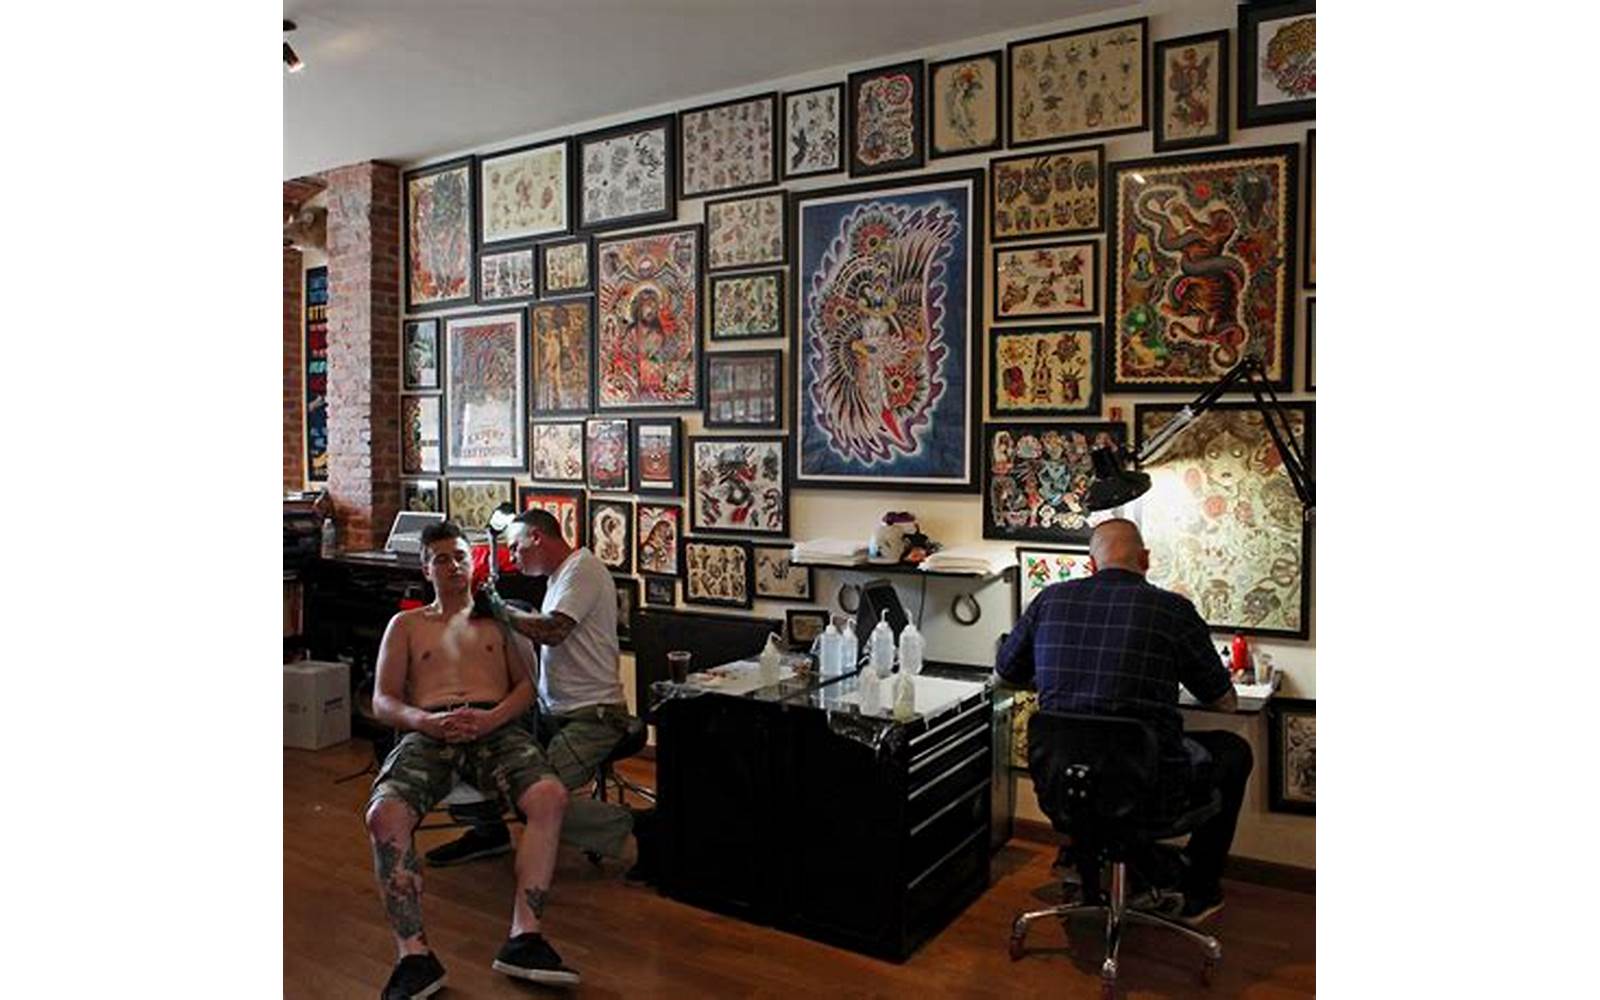 Framed Artwork for Tattoo Shop Interior Design